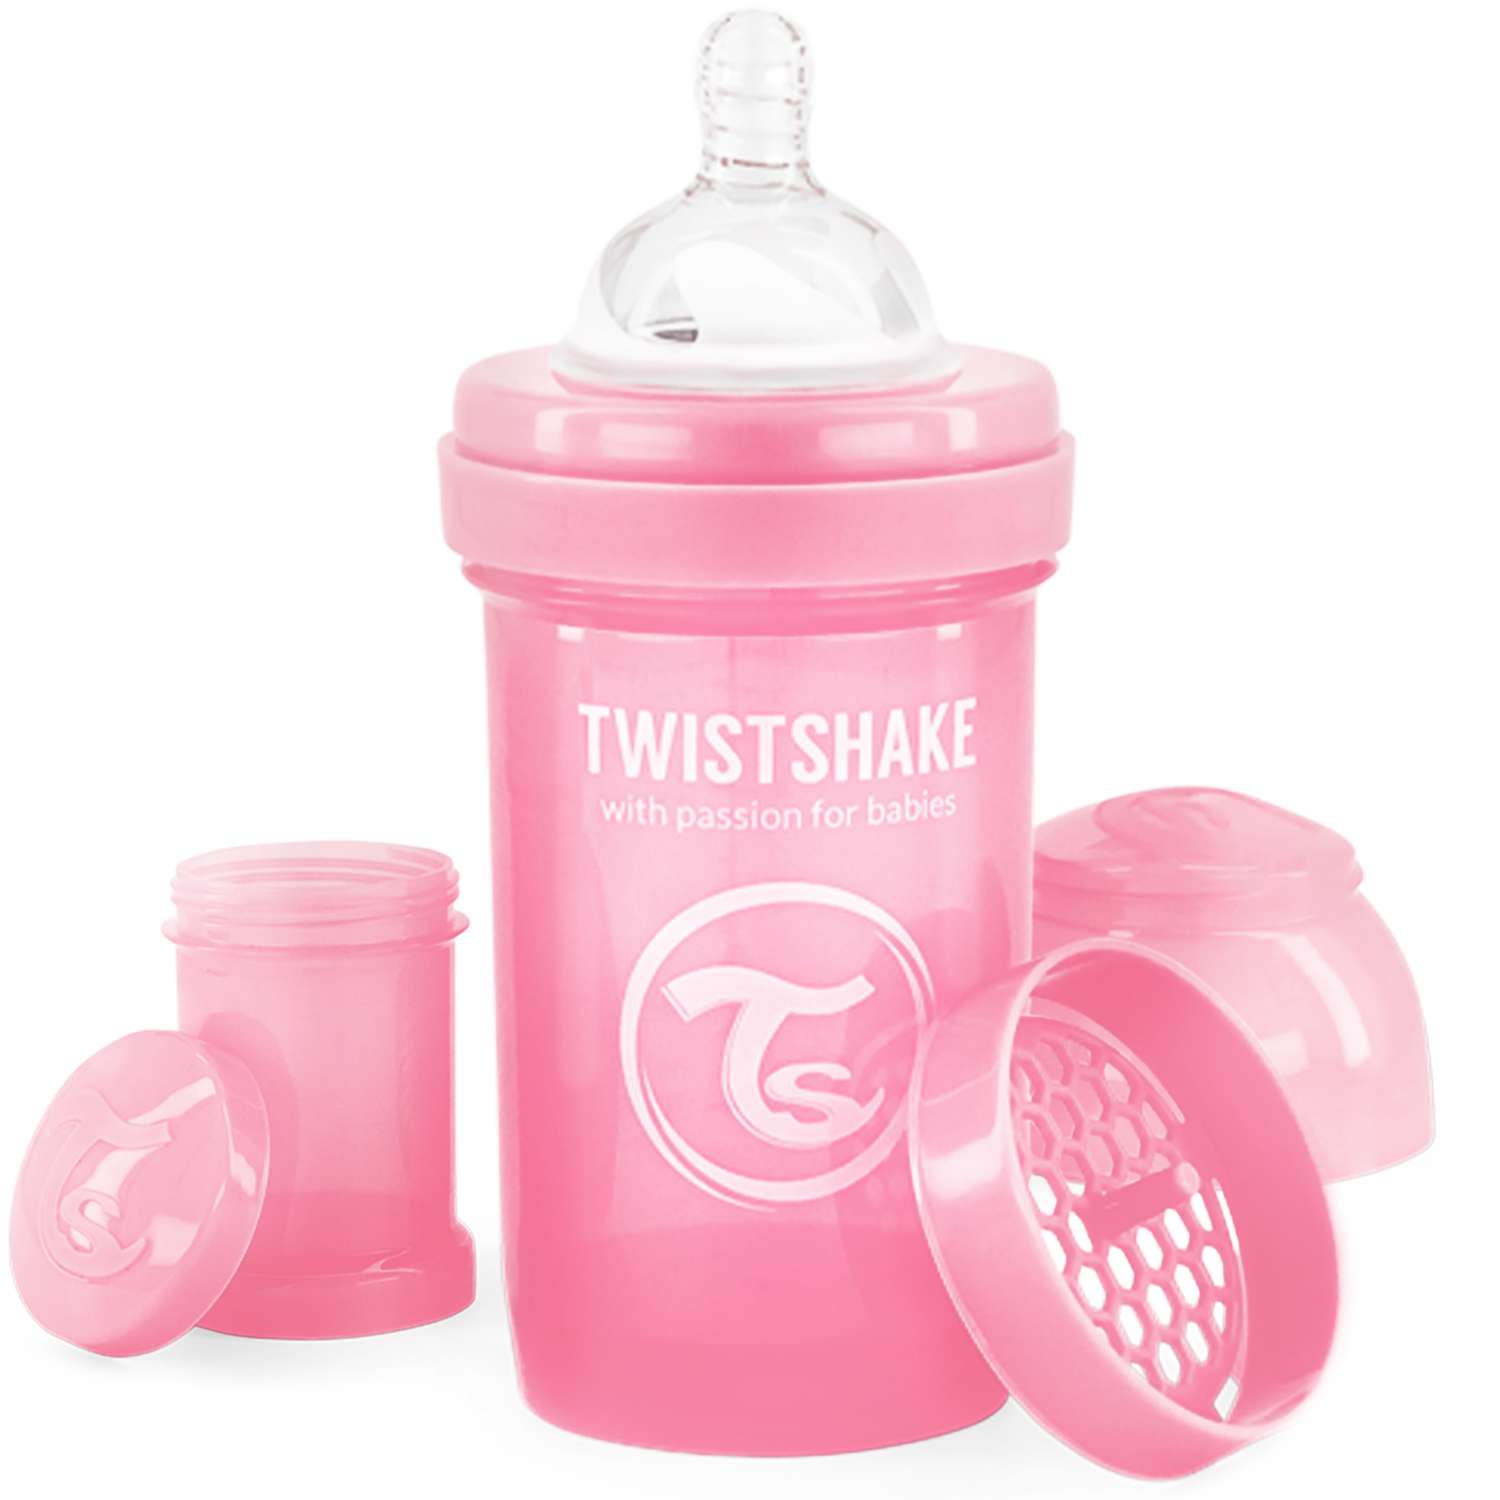 Бутылочка Twistshake антиколиковая 180мл Розовая - фото 1